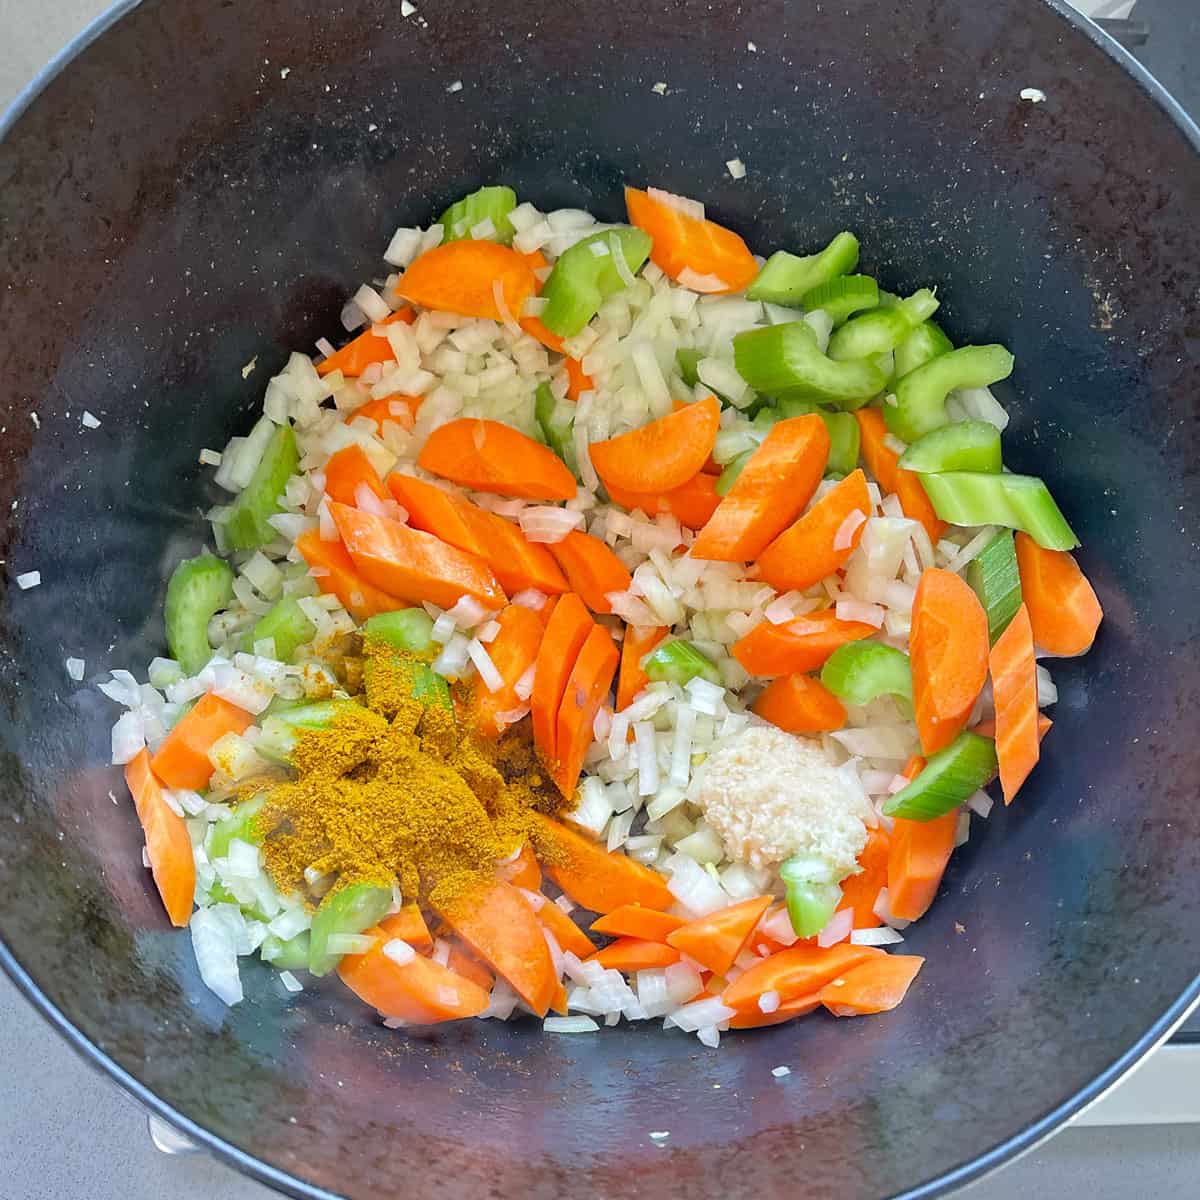 Vegetables cooking in a black pot.